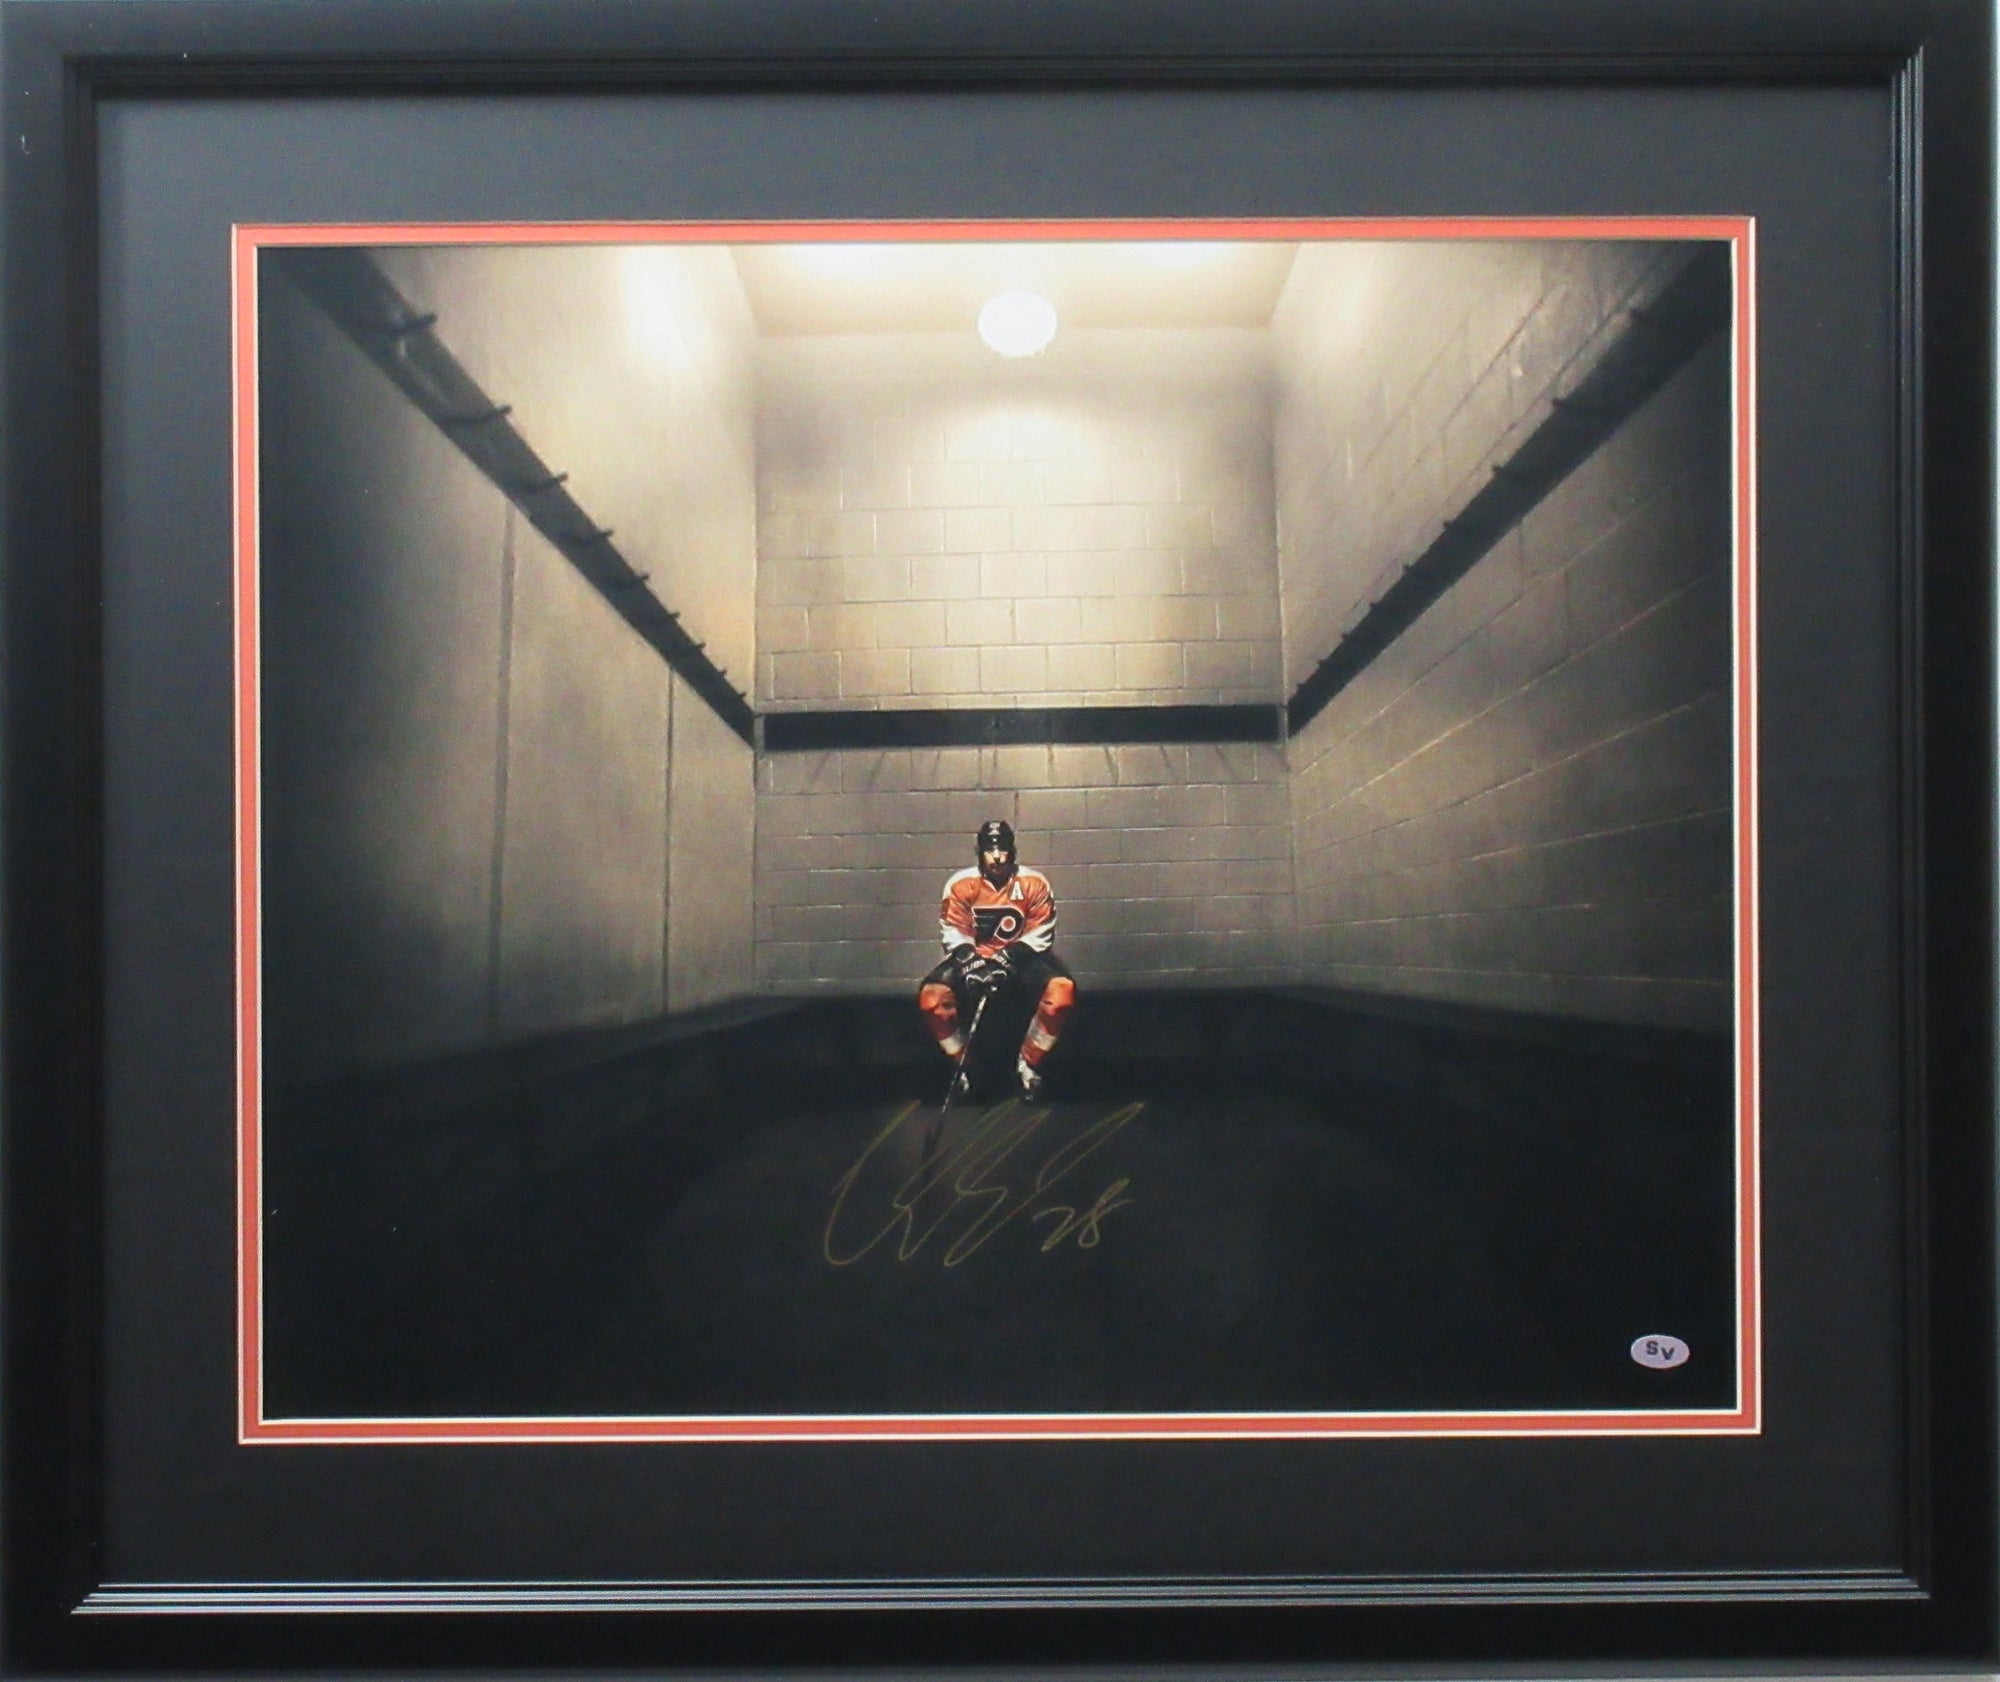 Claude Giroux Autographed 16x20 Philadelphia Flyers "Locker Room" Photo